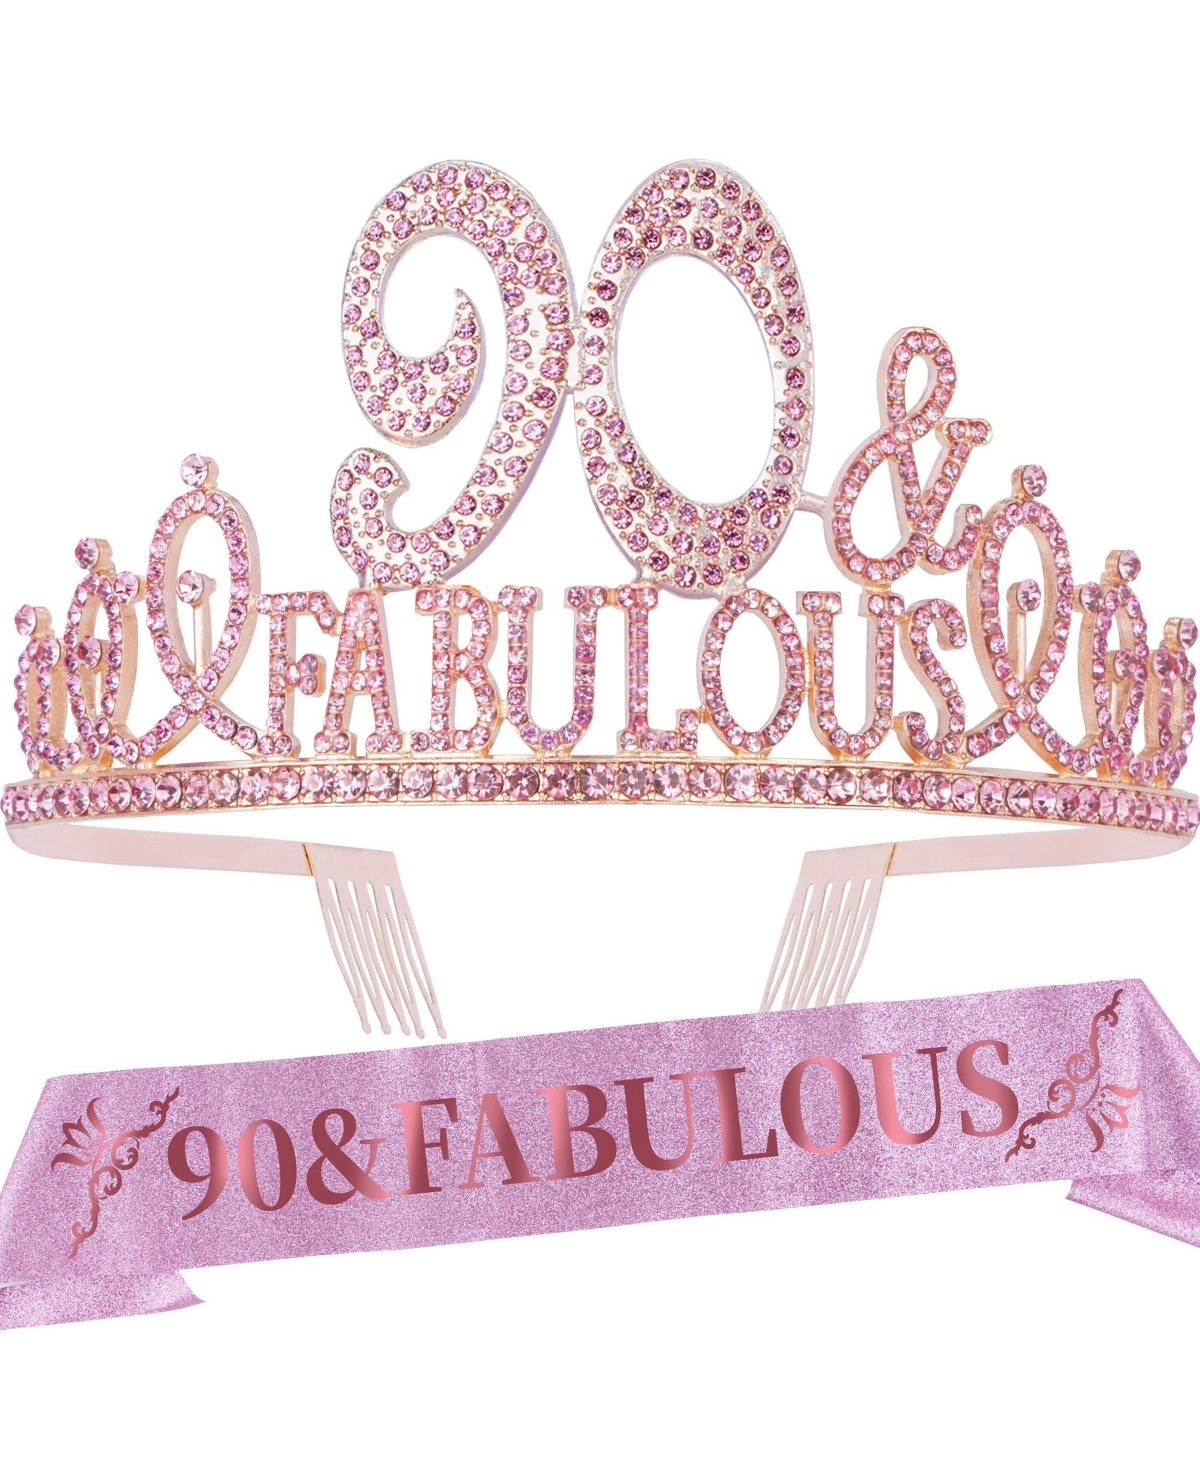 Ebe EmmasbyEmma 90th Birthday Sash and Tiara Set for Women - Glittery Pink Sash with Fabulous Rhinestone Metal Tiara, Perfect 90th Birthday Celebratio